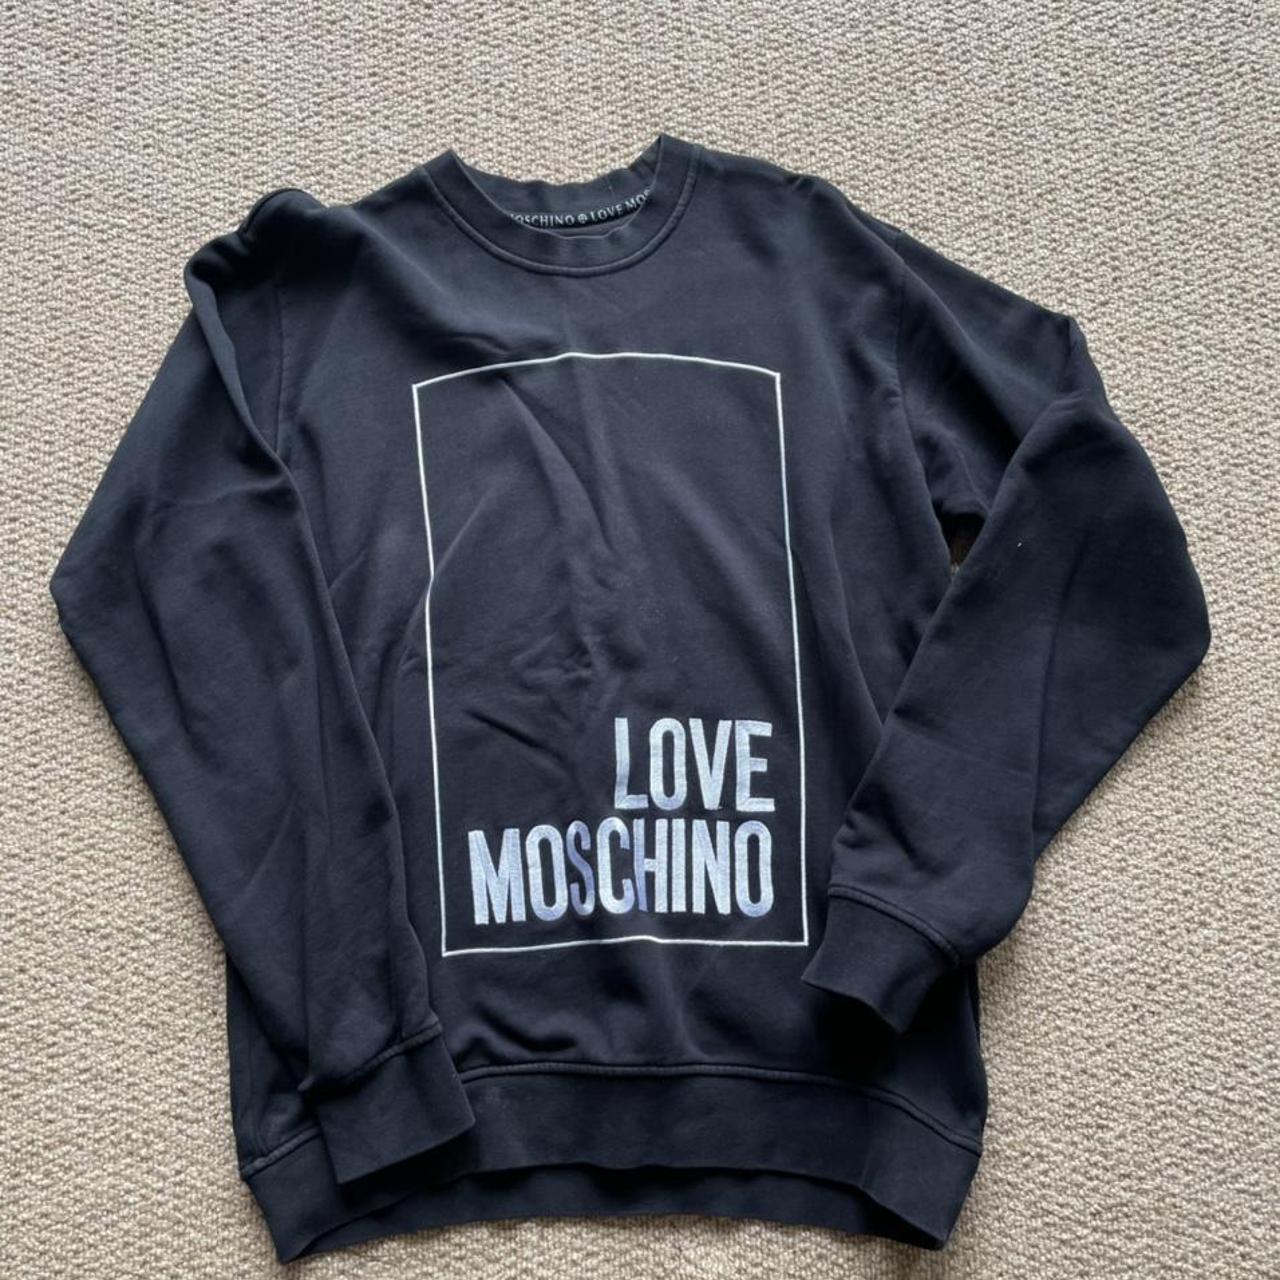 Love moschino sweater great condition #moschino - Depop